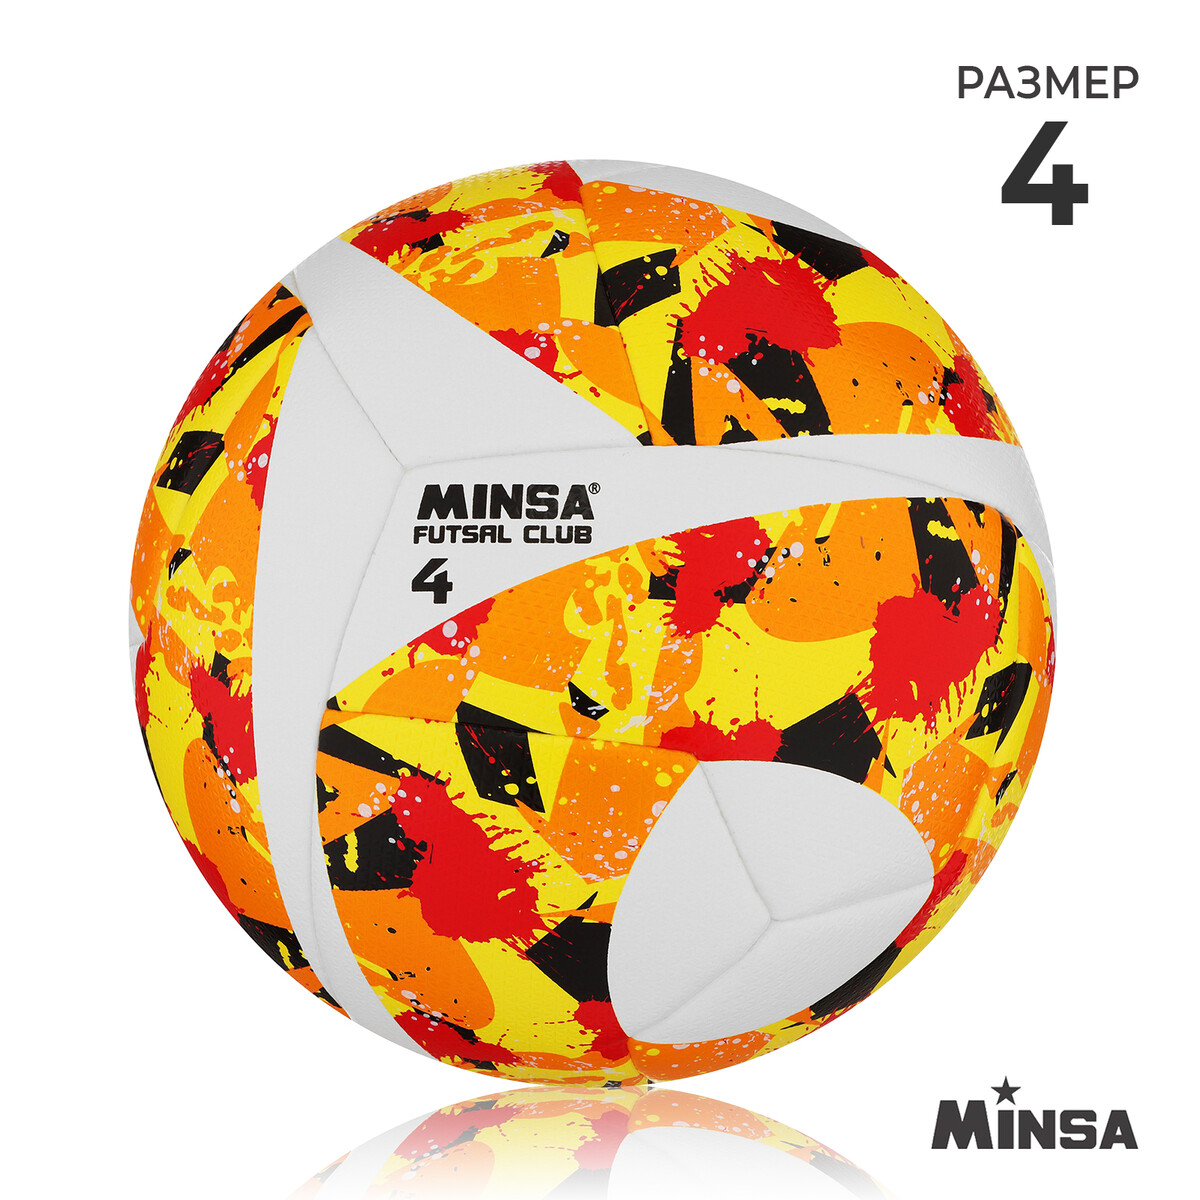 Мяч футбольный minsa futsal club, pu, гибридная сшивка, размер 4 мяч футзальный torres futsal match fs32064 р 4